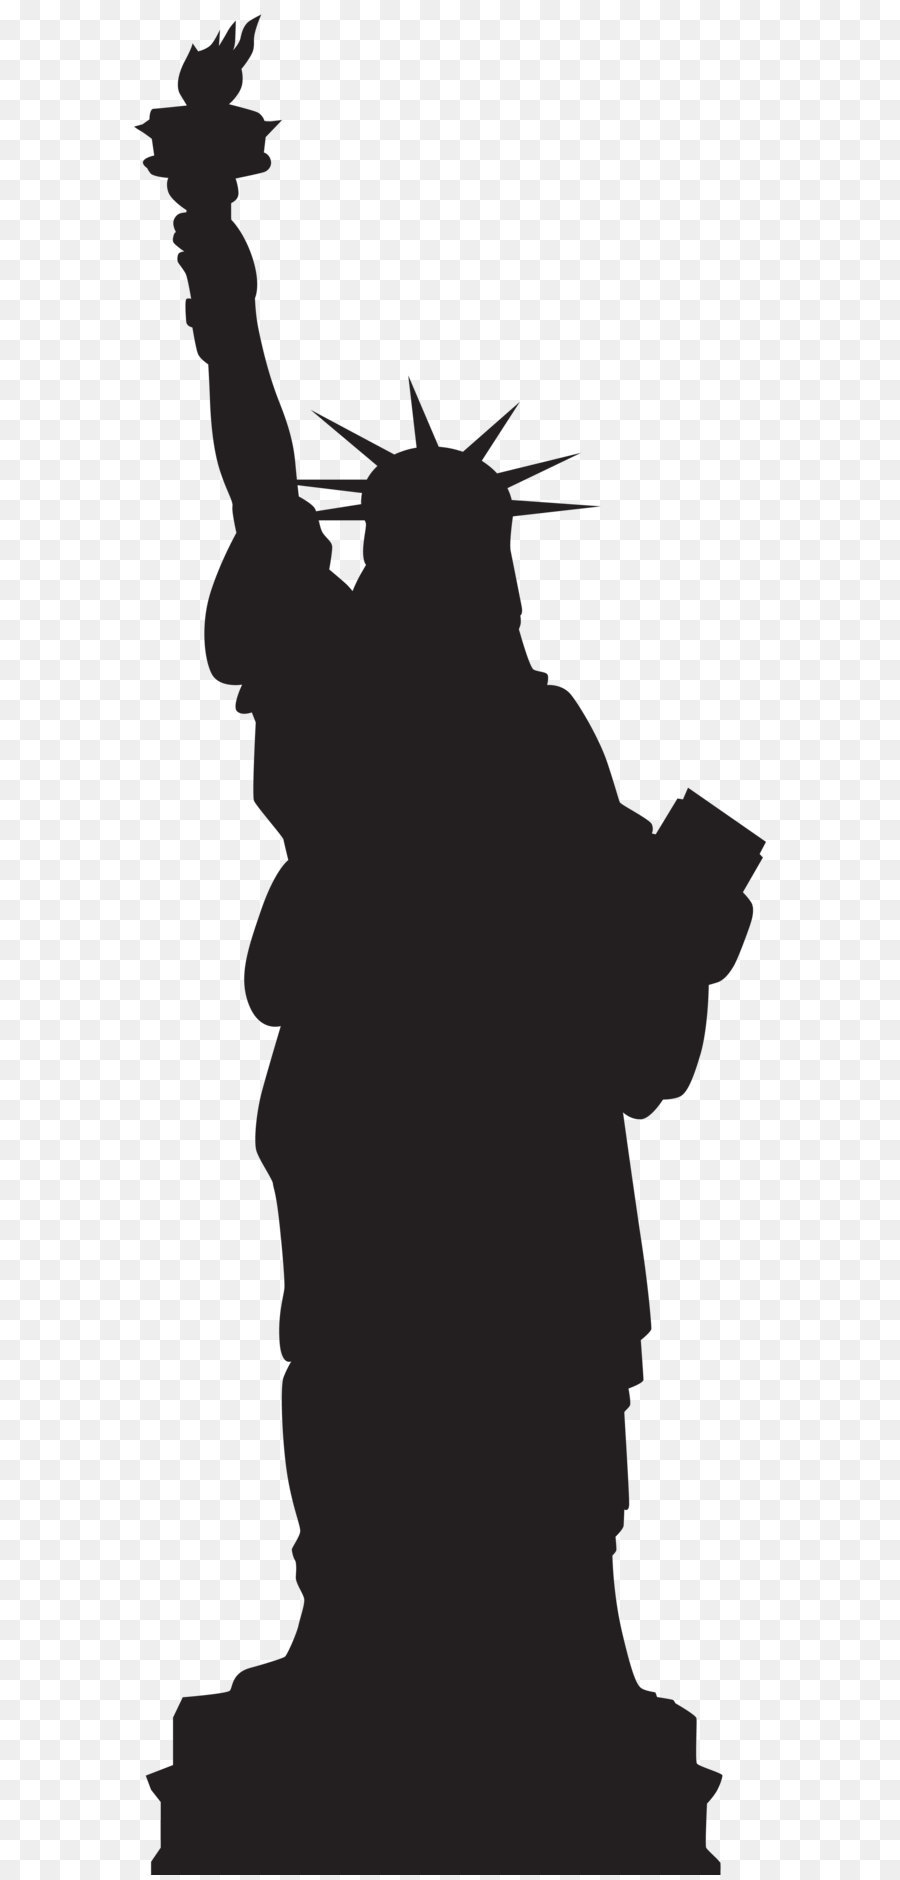 Statue of Liberty New York Harbor Ellis Island Statue of Freedom - Statue of Liberty Silhouette Transparent PNG Clip Art Image png download - 2773*8000 - Free Transparent Statue Of Liberty png Download.